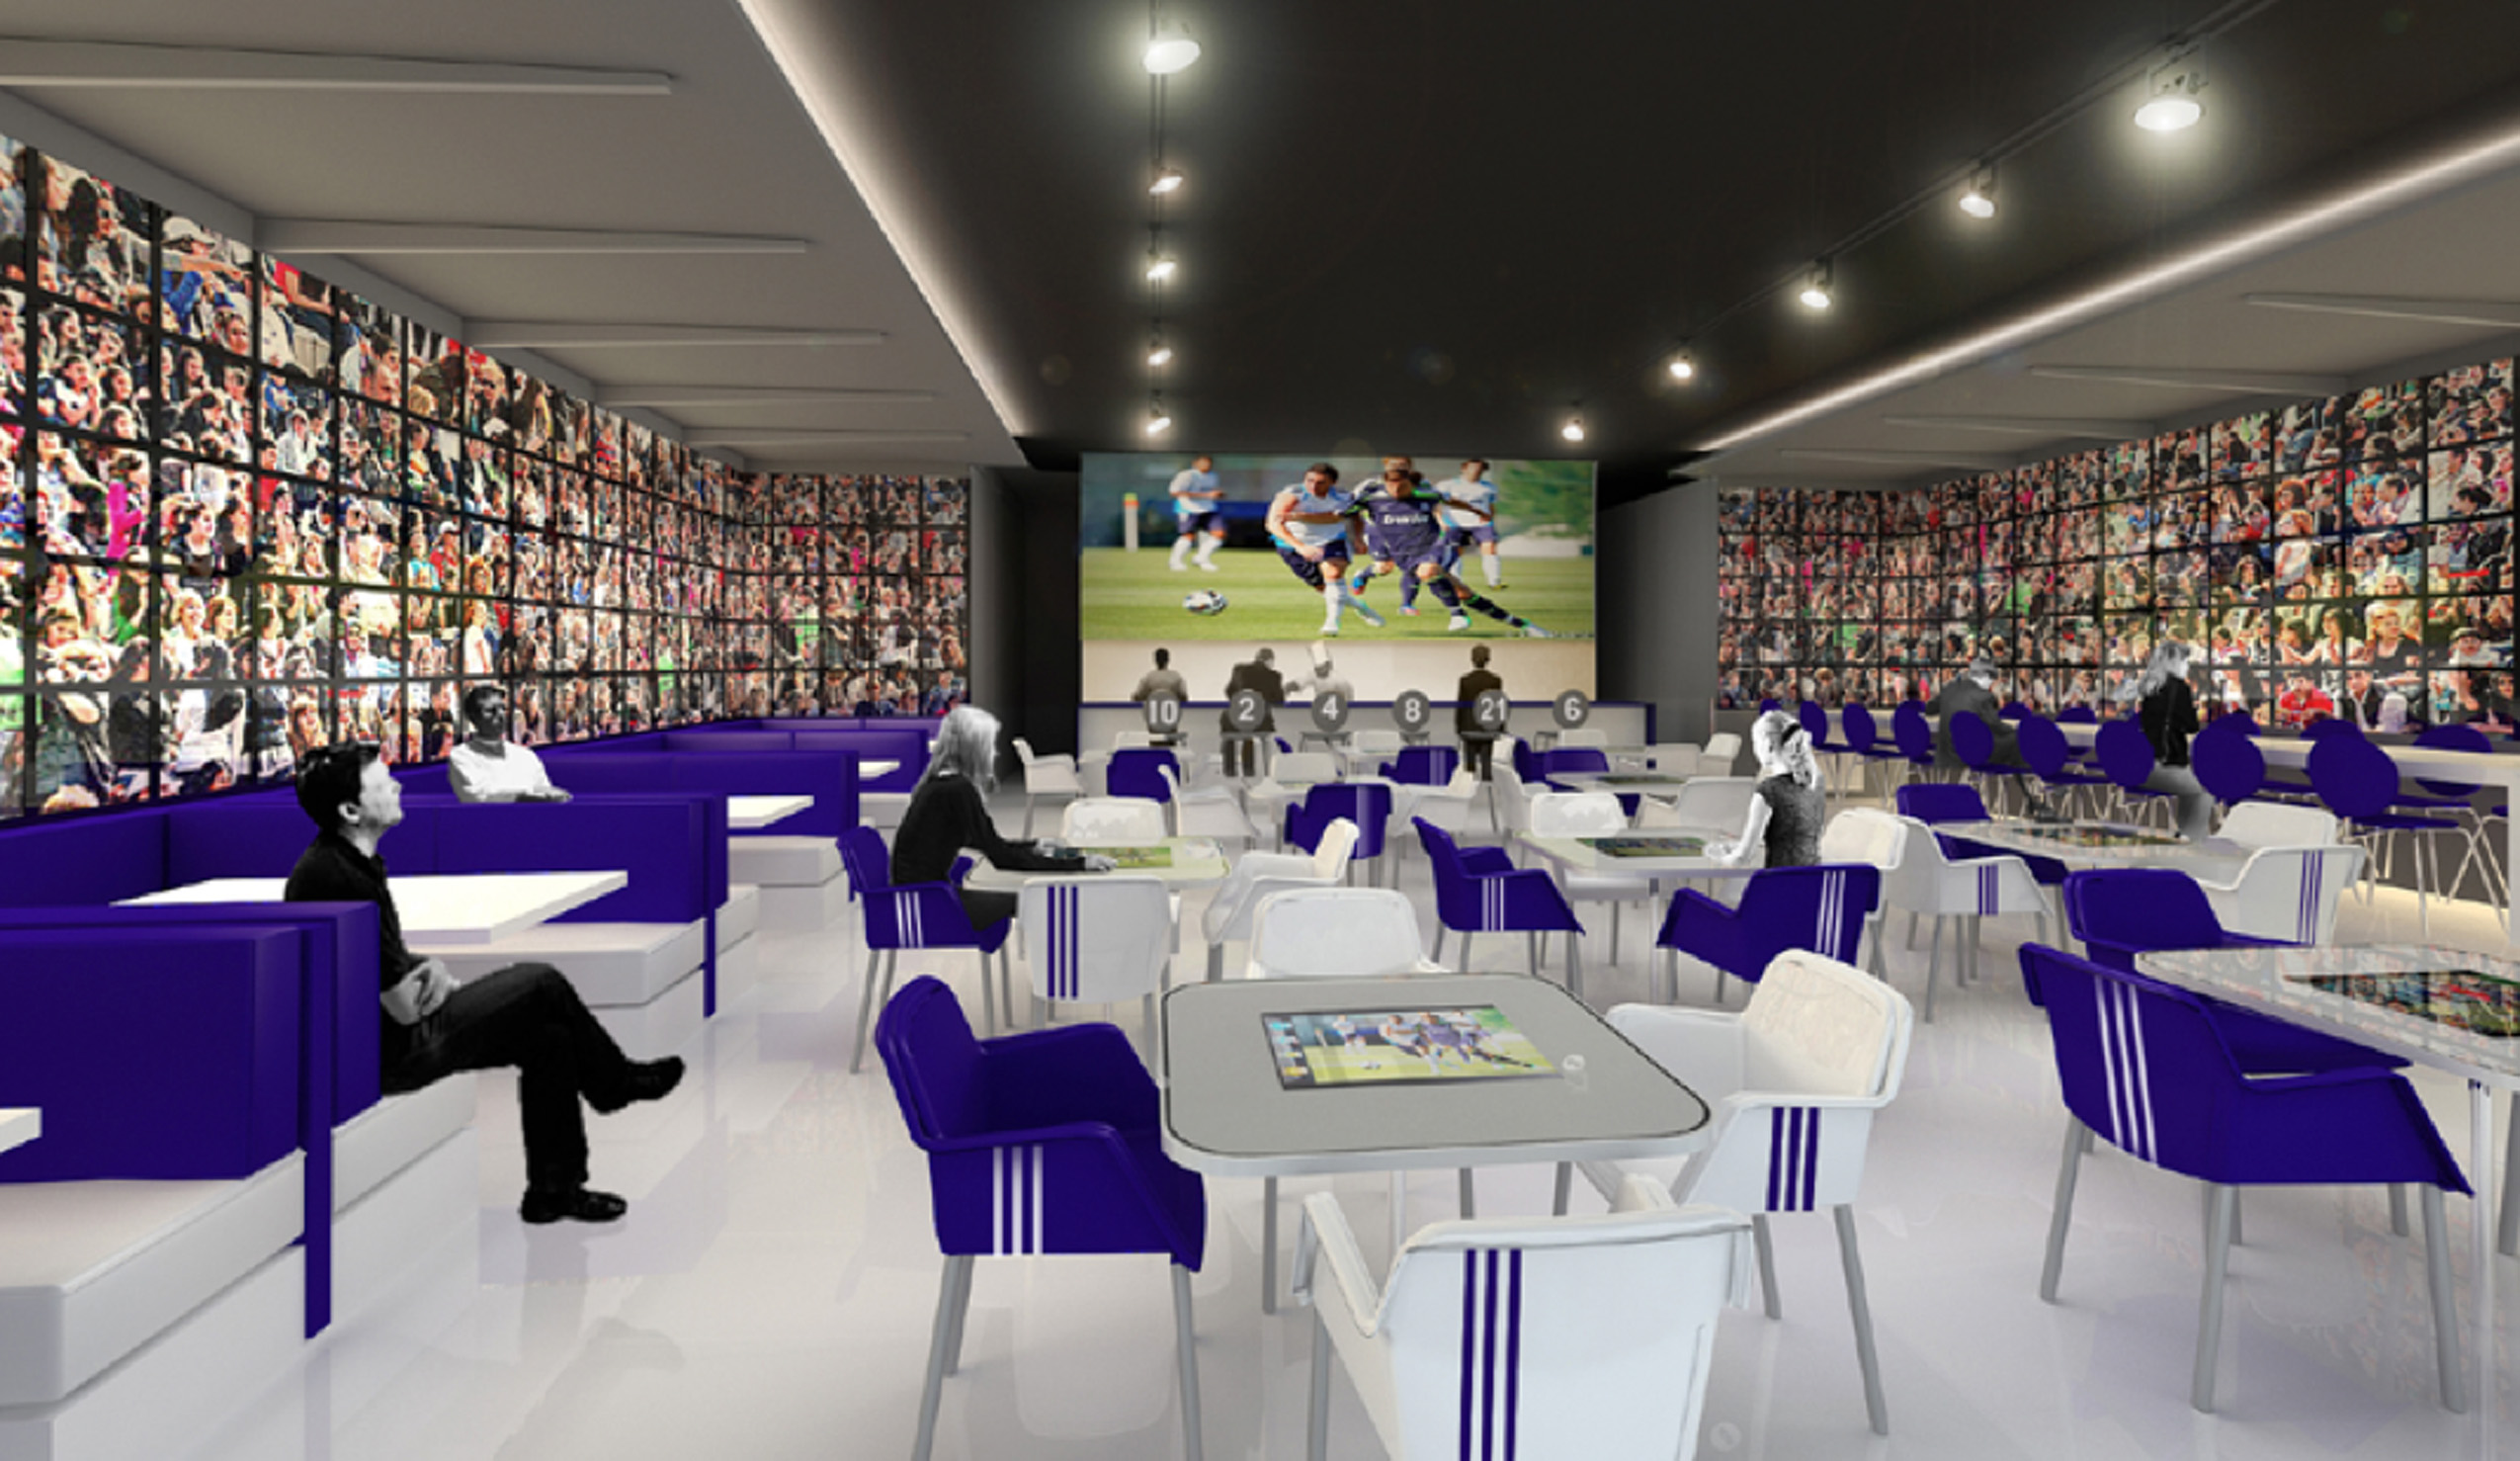 
Мадридский Реал открыл ресторан в Дубае